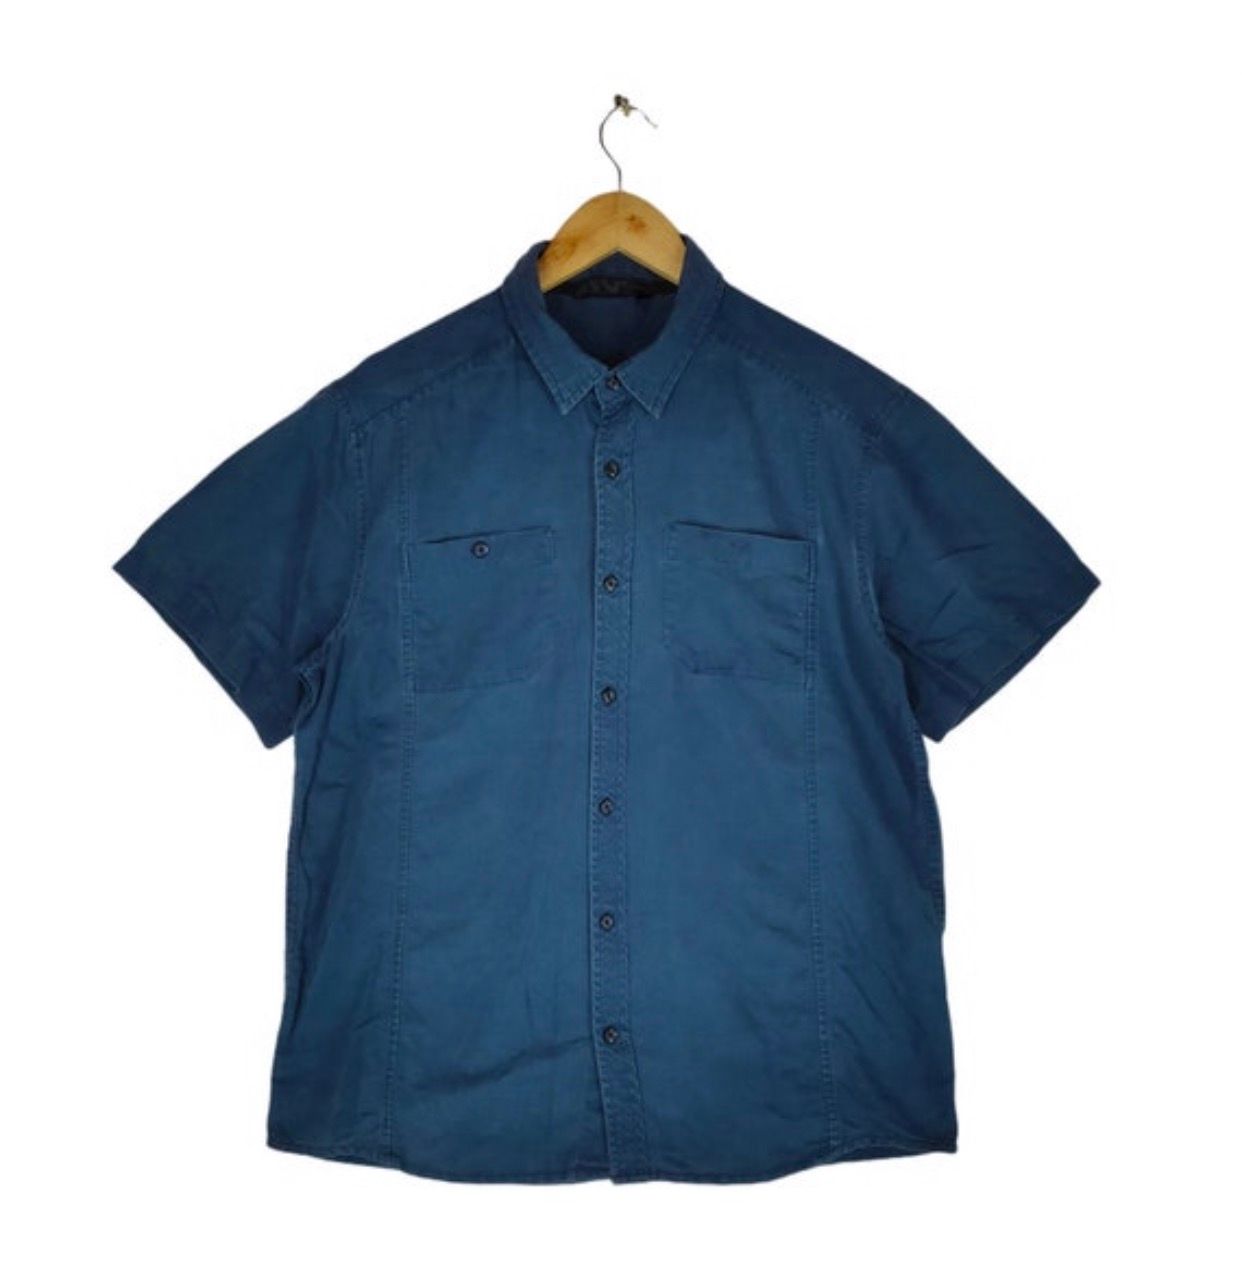 Vintage ARC’TERYX EMBROIDERY LOGO Back Full Button Shirt - 1